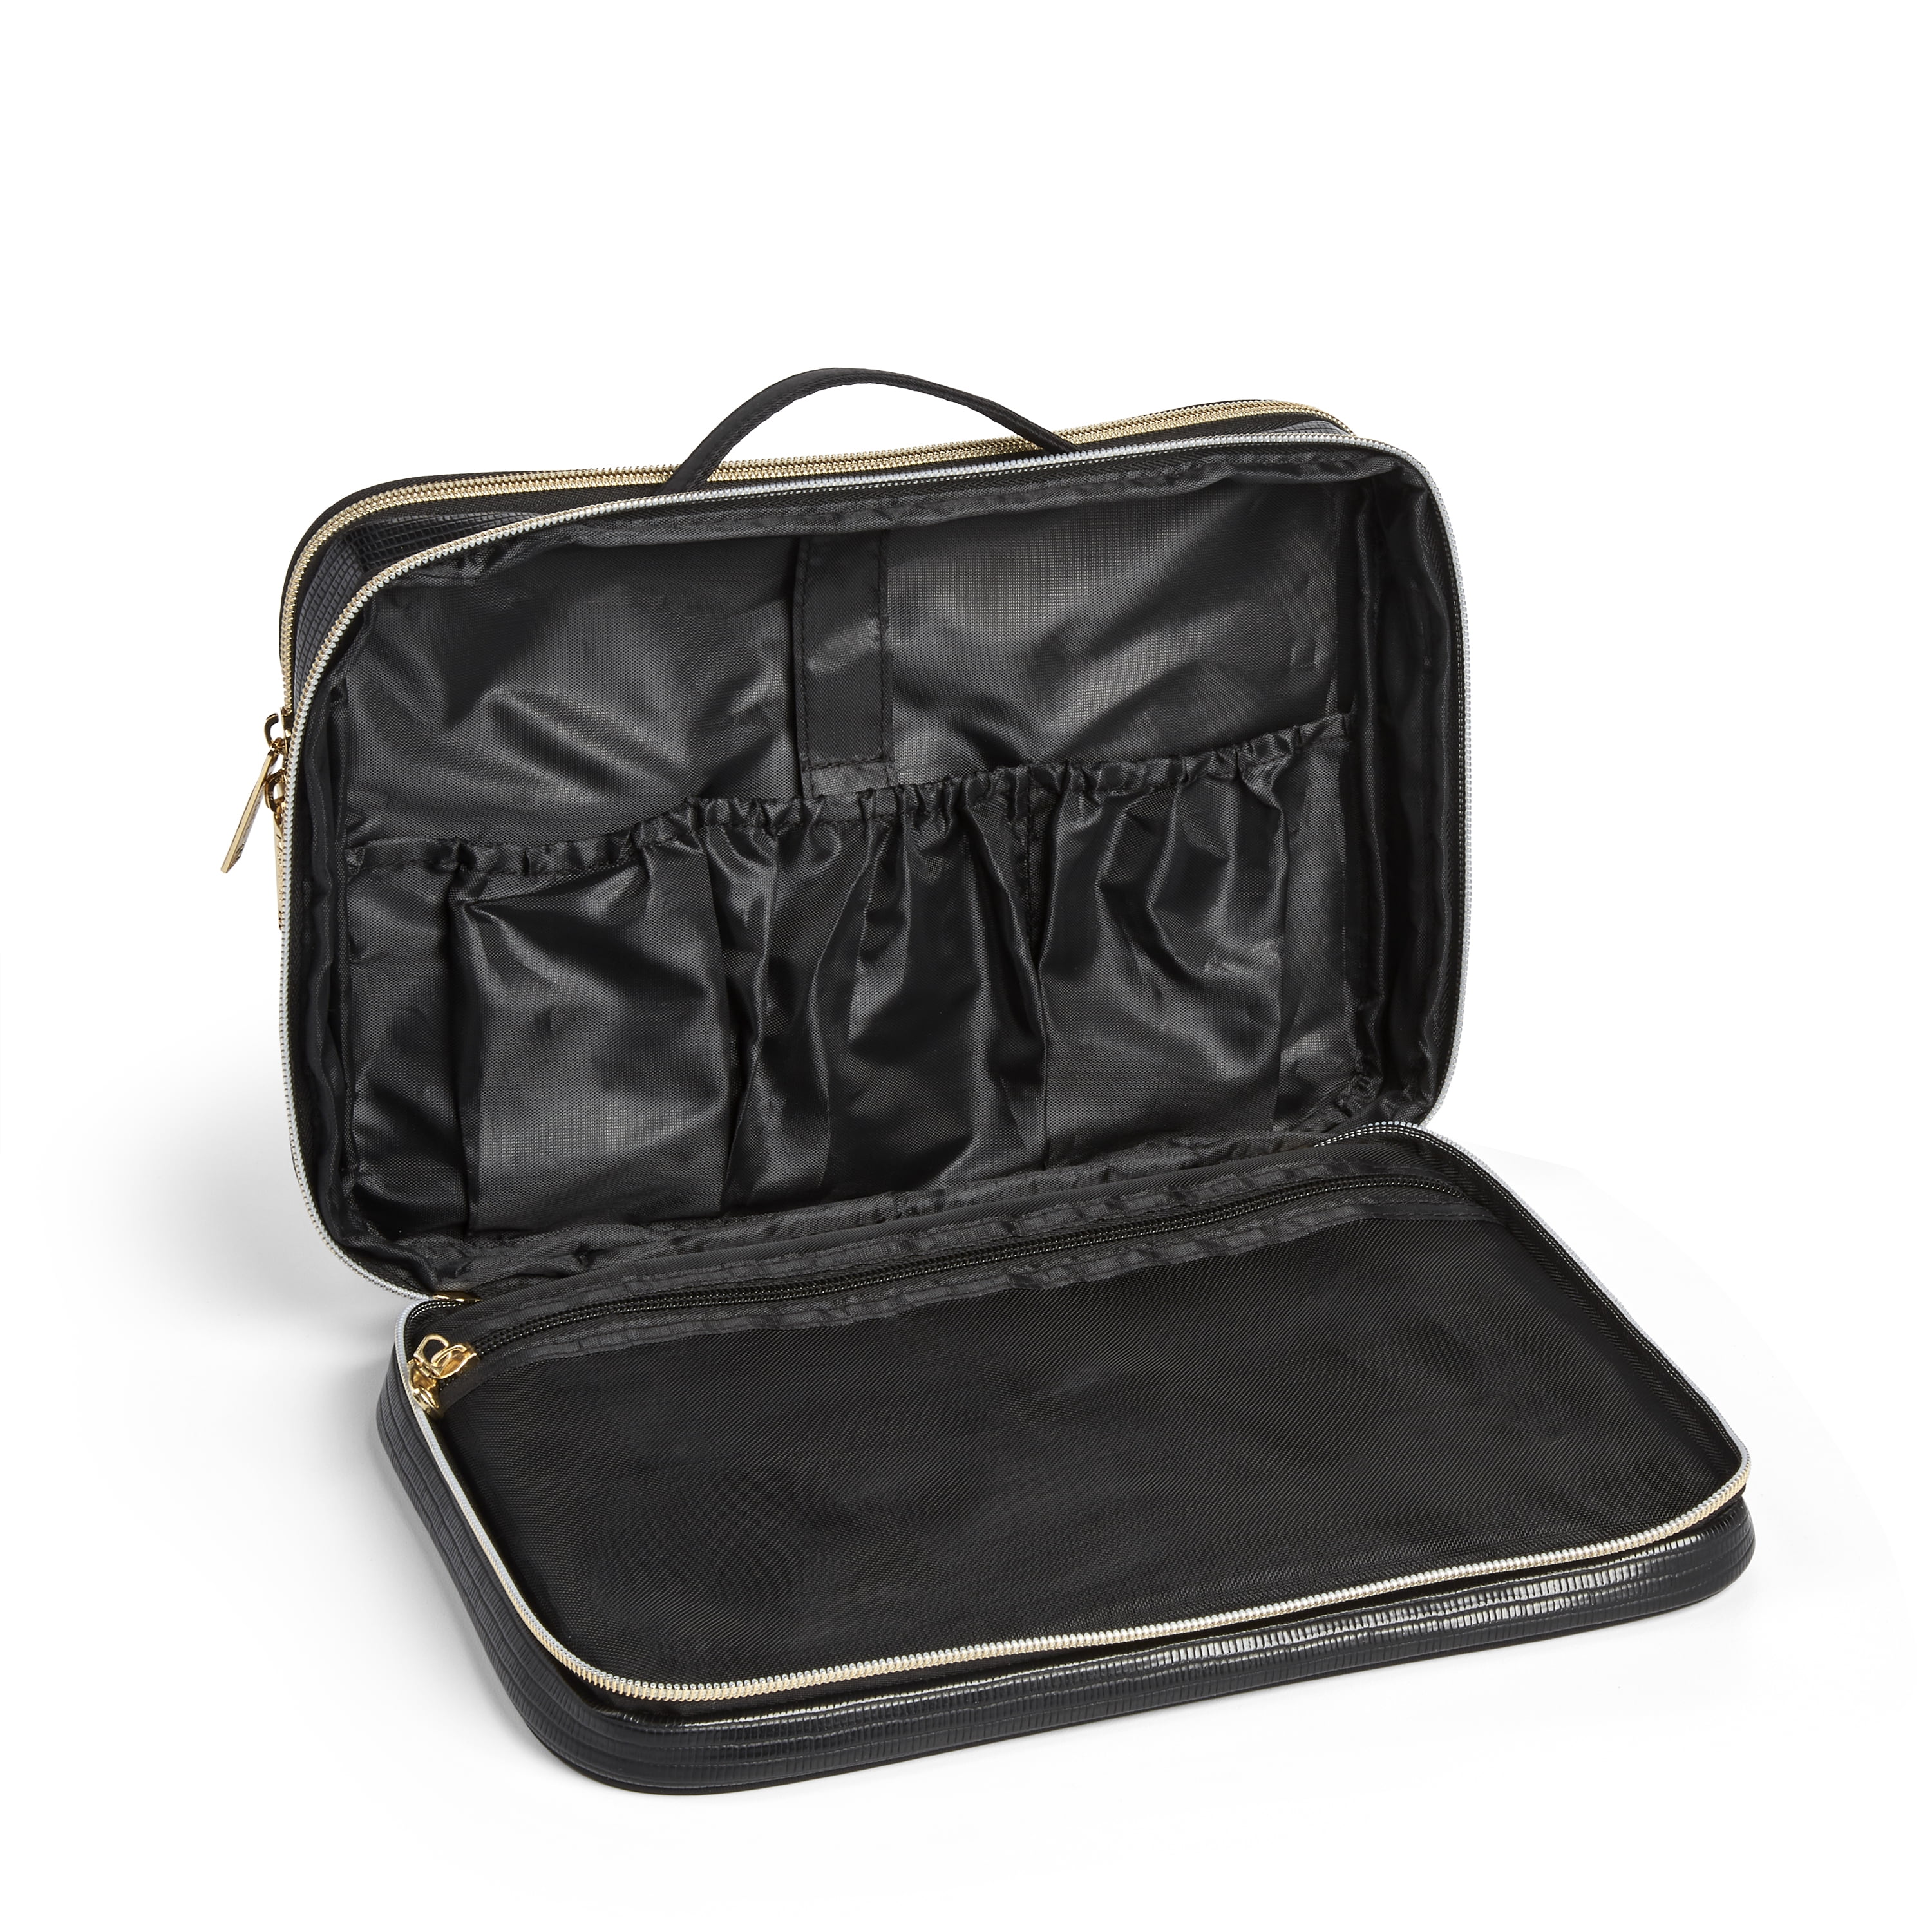 Modella Travel Zip and Carry Cosmetic Bag Weekender, Black